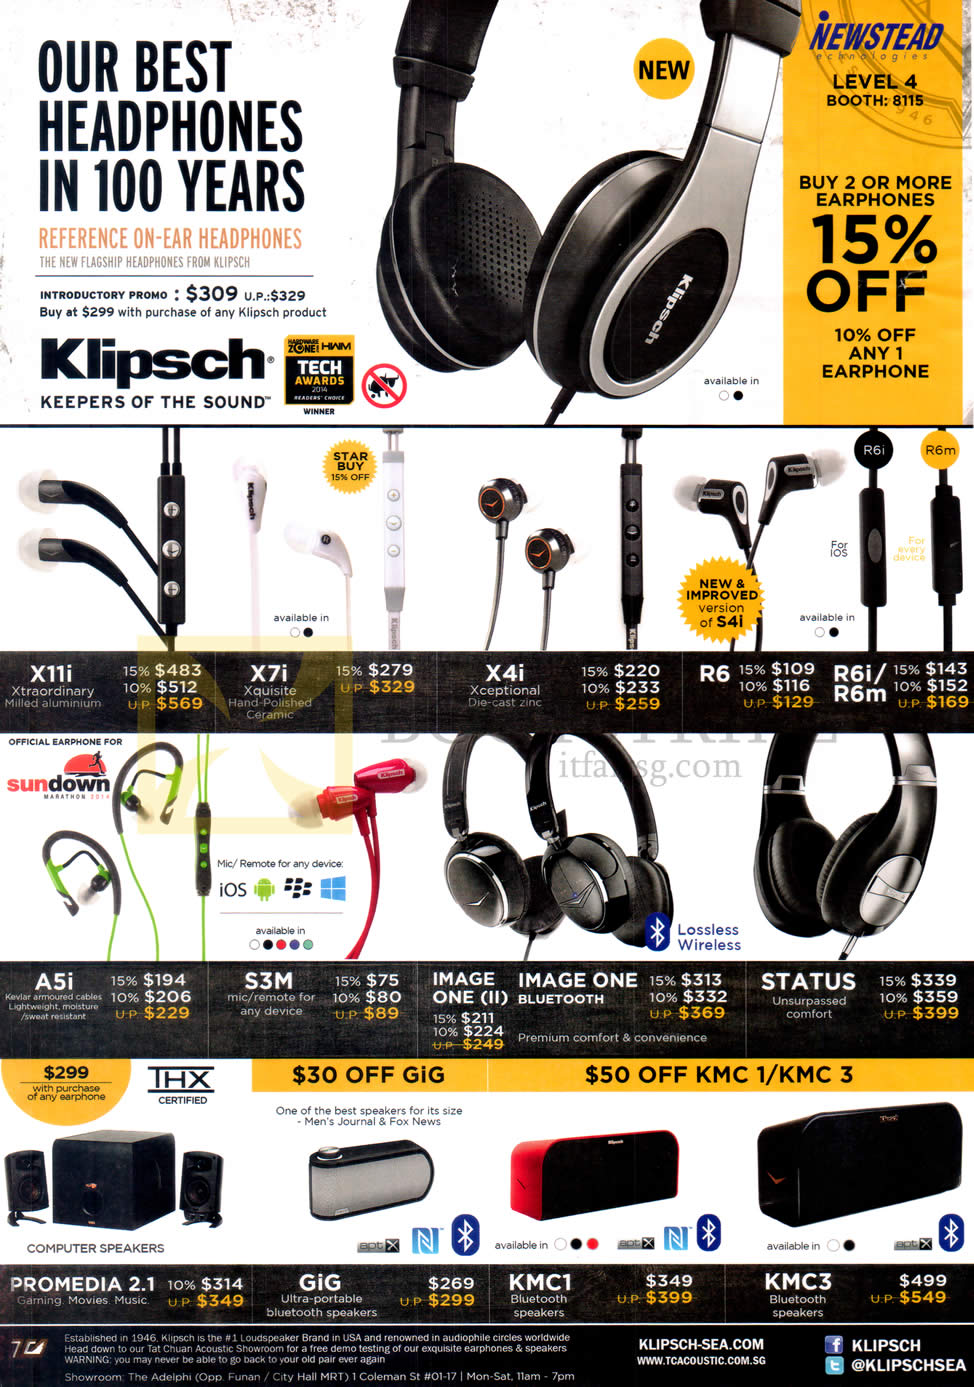 IT SHOW 2015 price list image brochure of Newstead Klipsch Earphones, Headphones, Speakers, X11i, X7i, X4i, R6, R6i, R6m, A5i, S3M, Image One II, Bluetooth, Status, Promedia 2.1, Gig, KMC1, KMC3